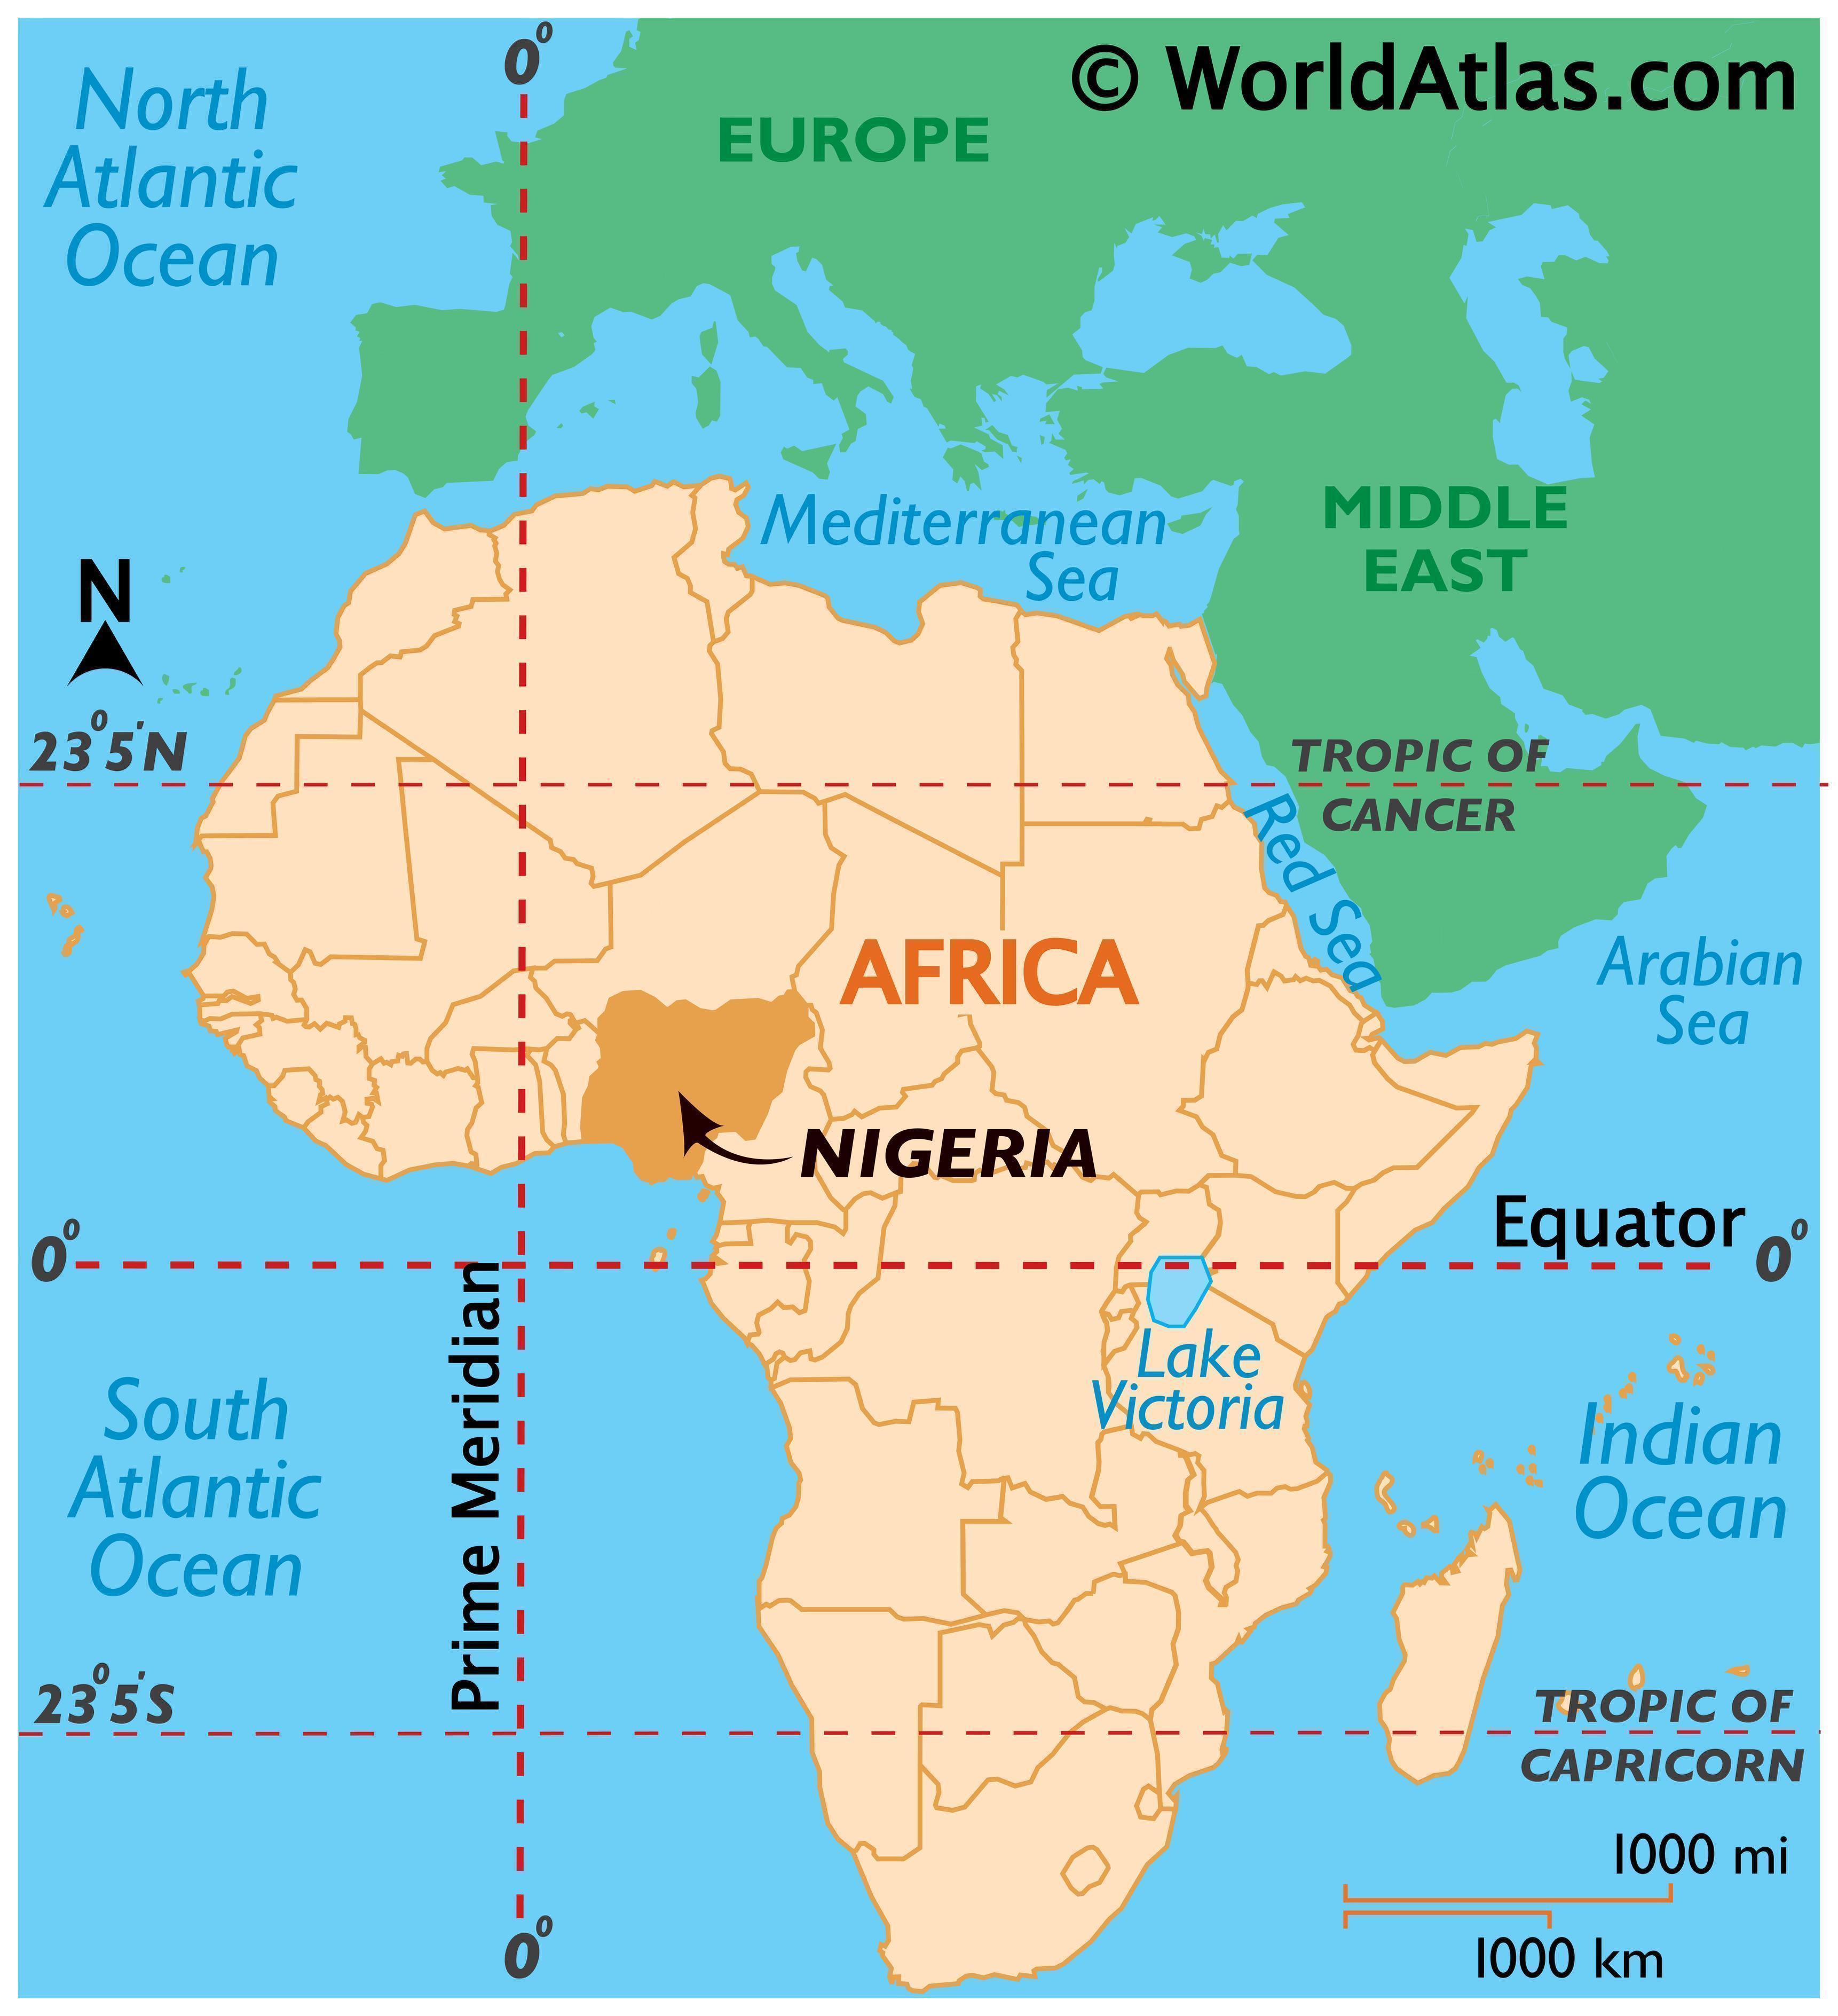 Nigeria Maps & Facts - World Atlas